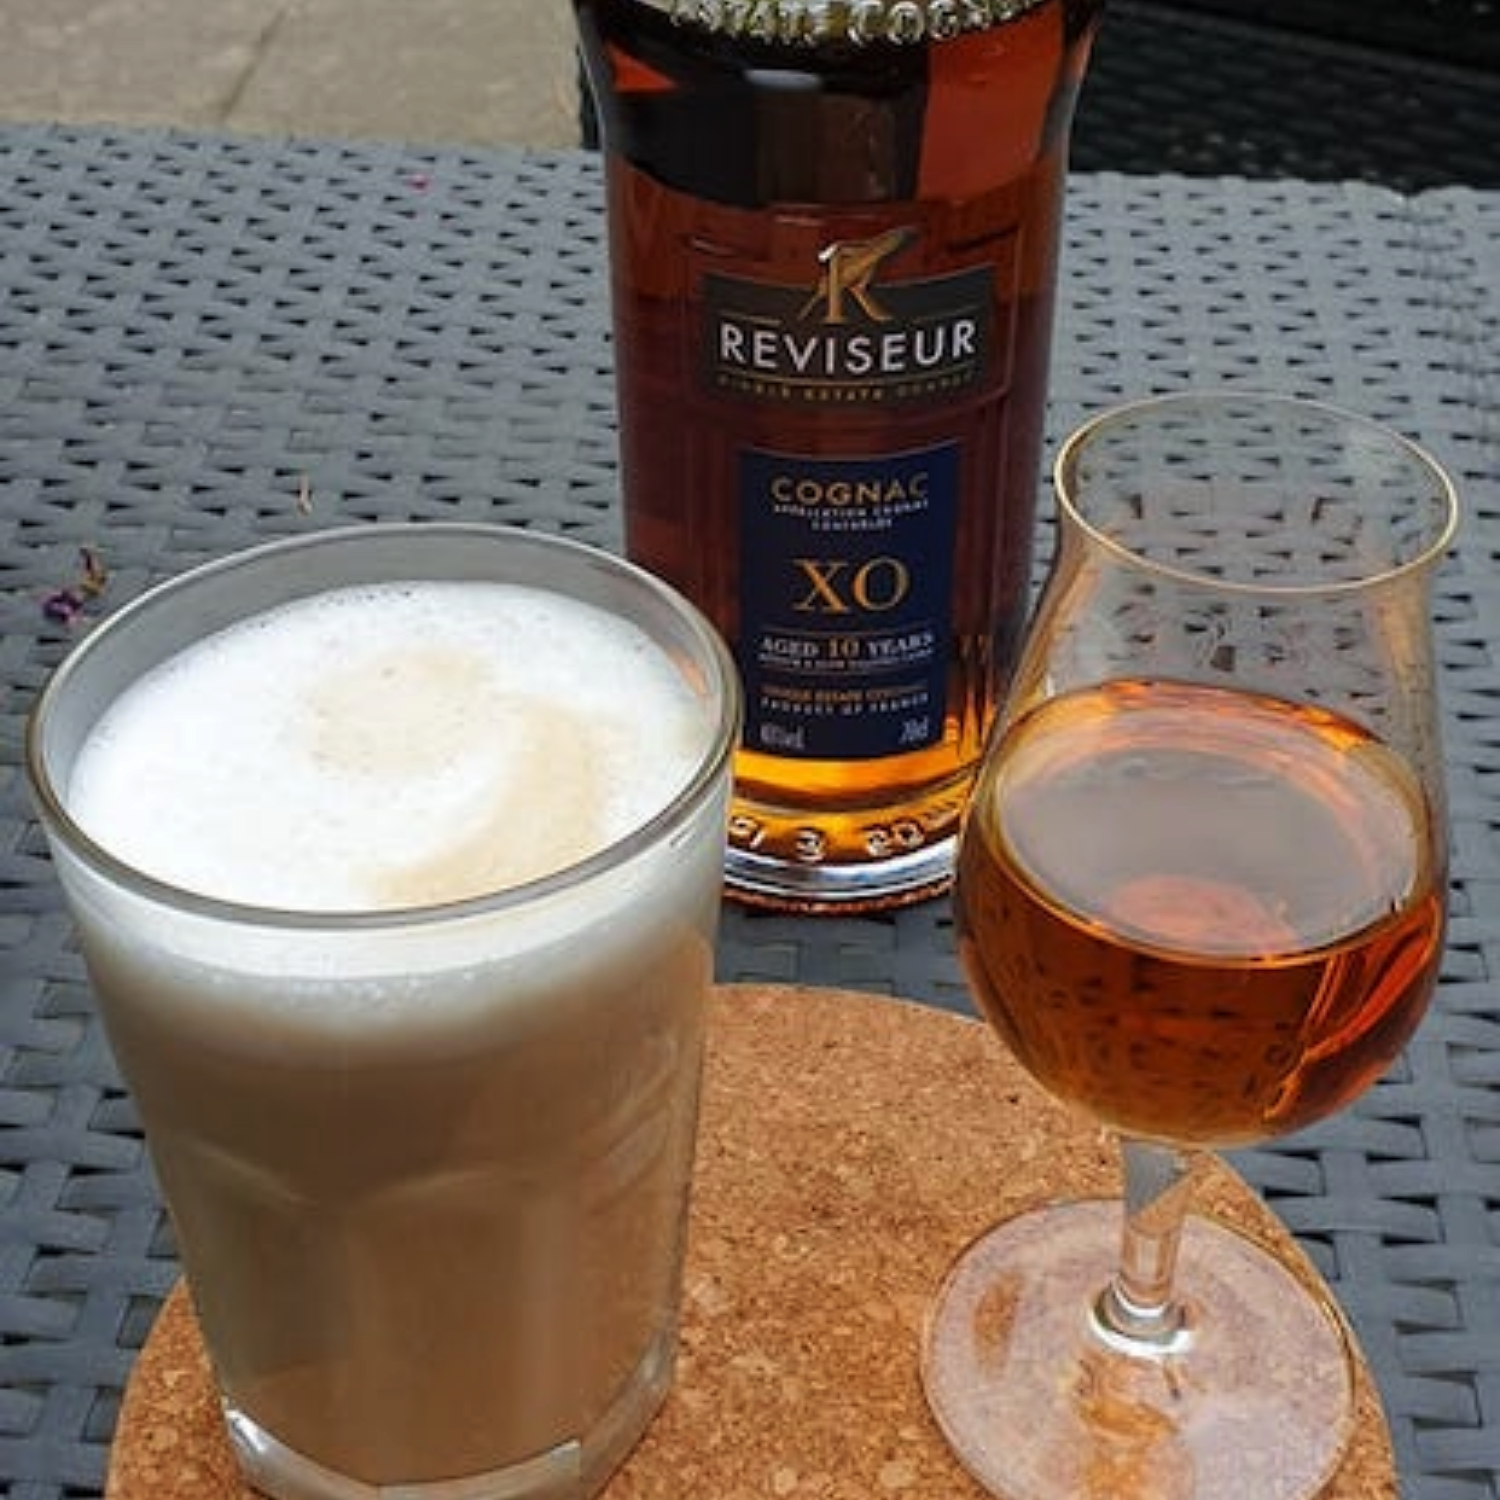 Reviseur XO Cognac enjoyed with a Latte Macchiato